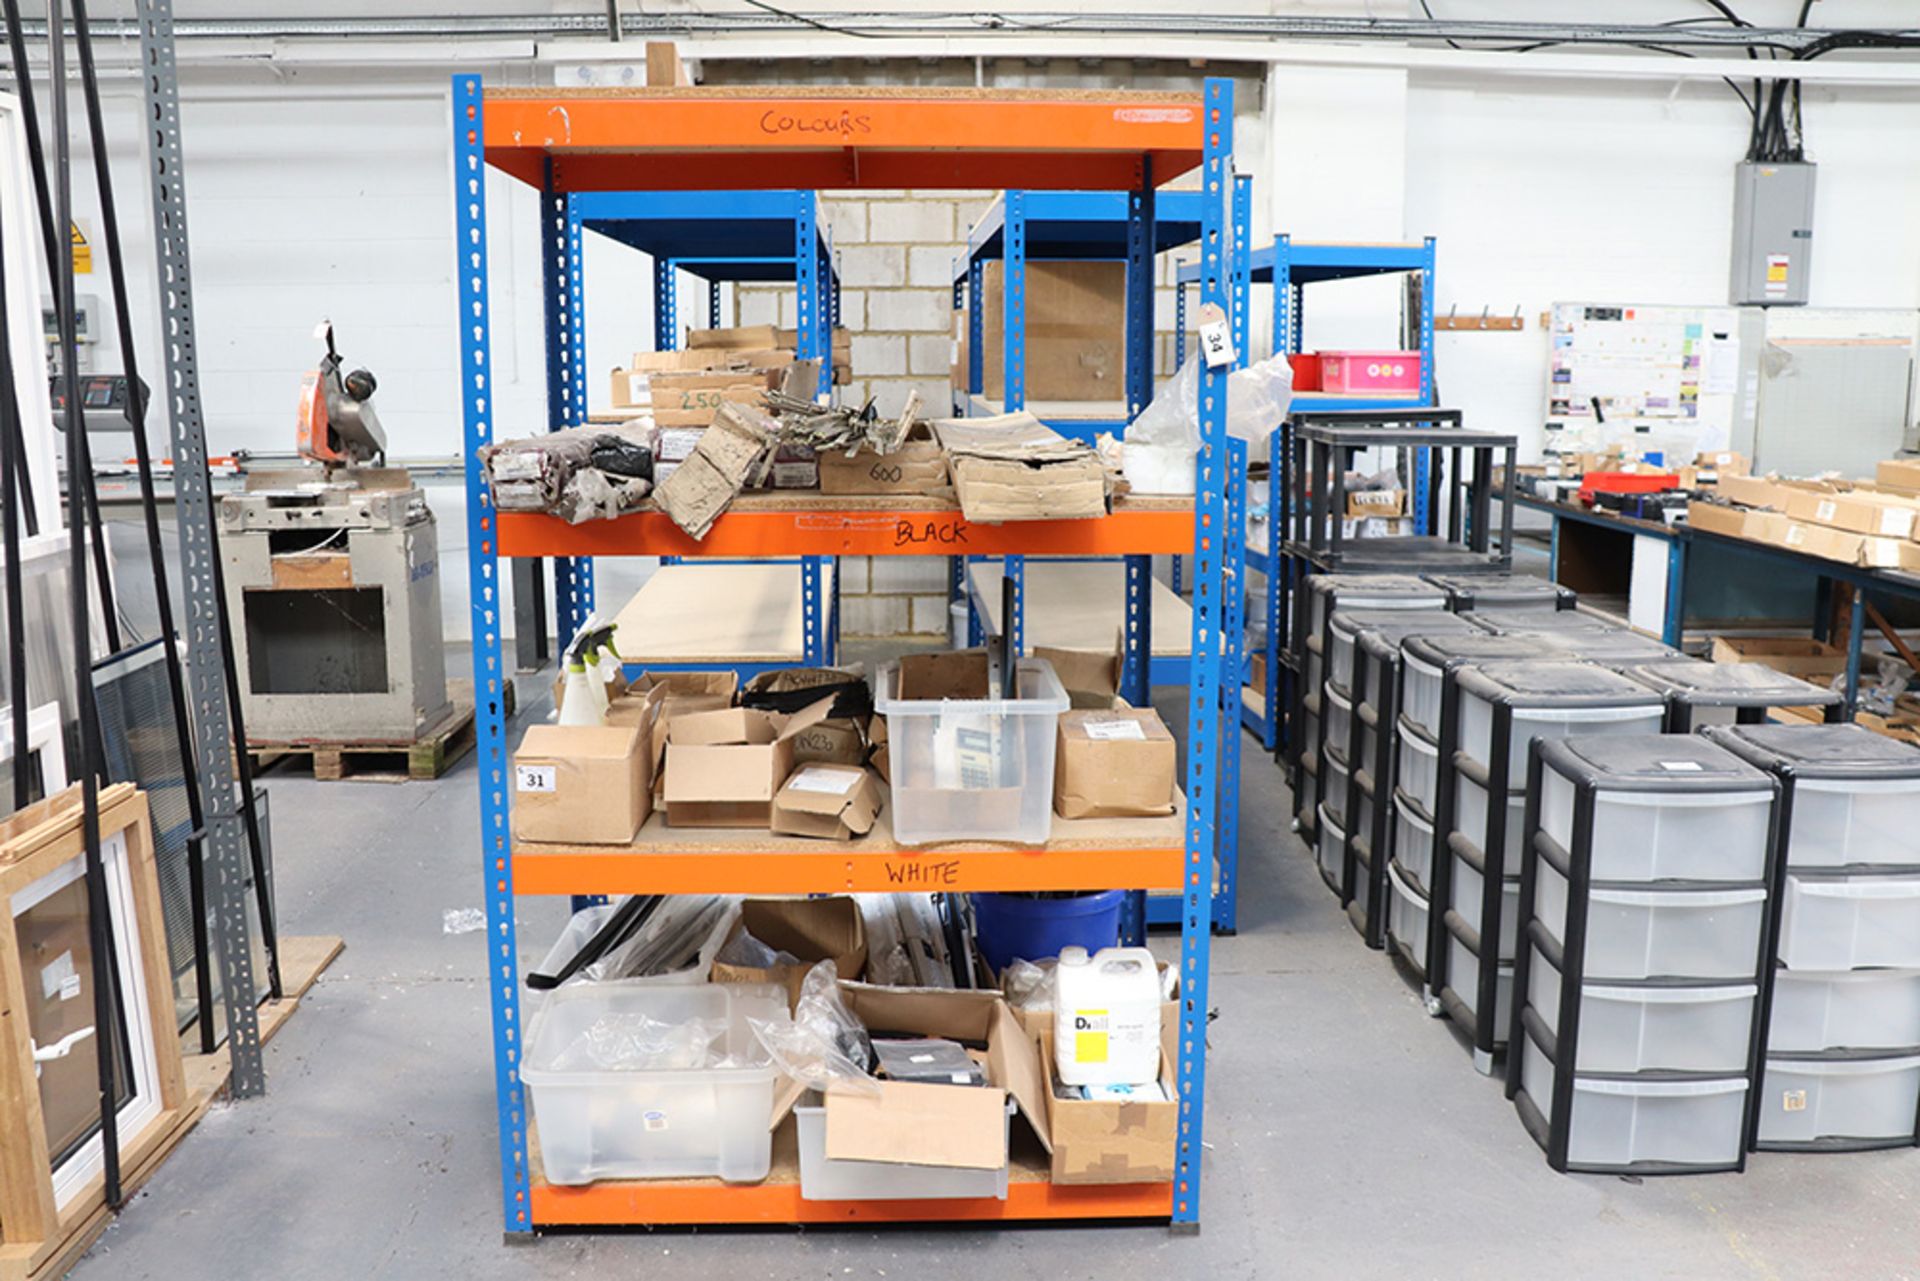 Blue and orange boltless rack of 4 shelves (measures 123cm long x 78cm wide x 2m high)